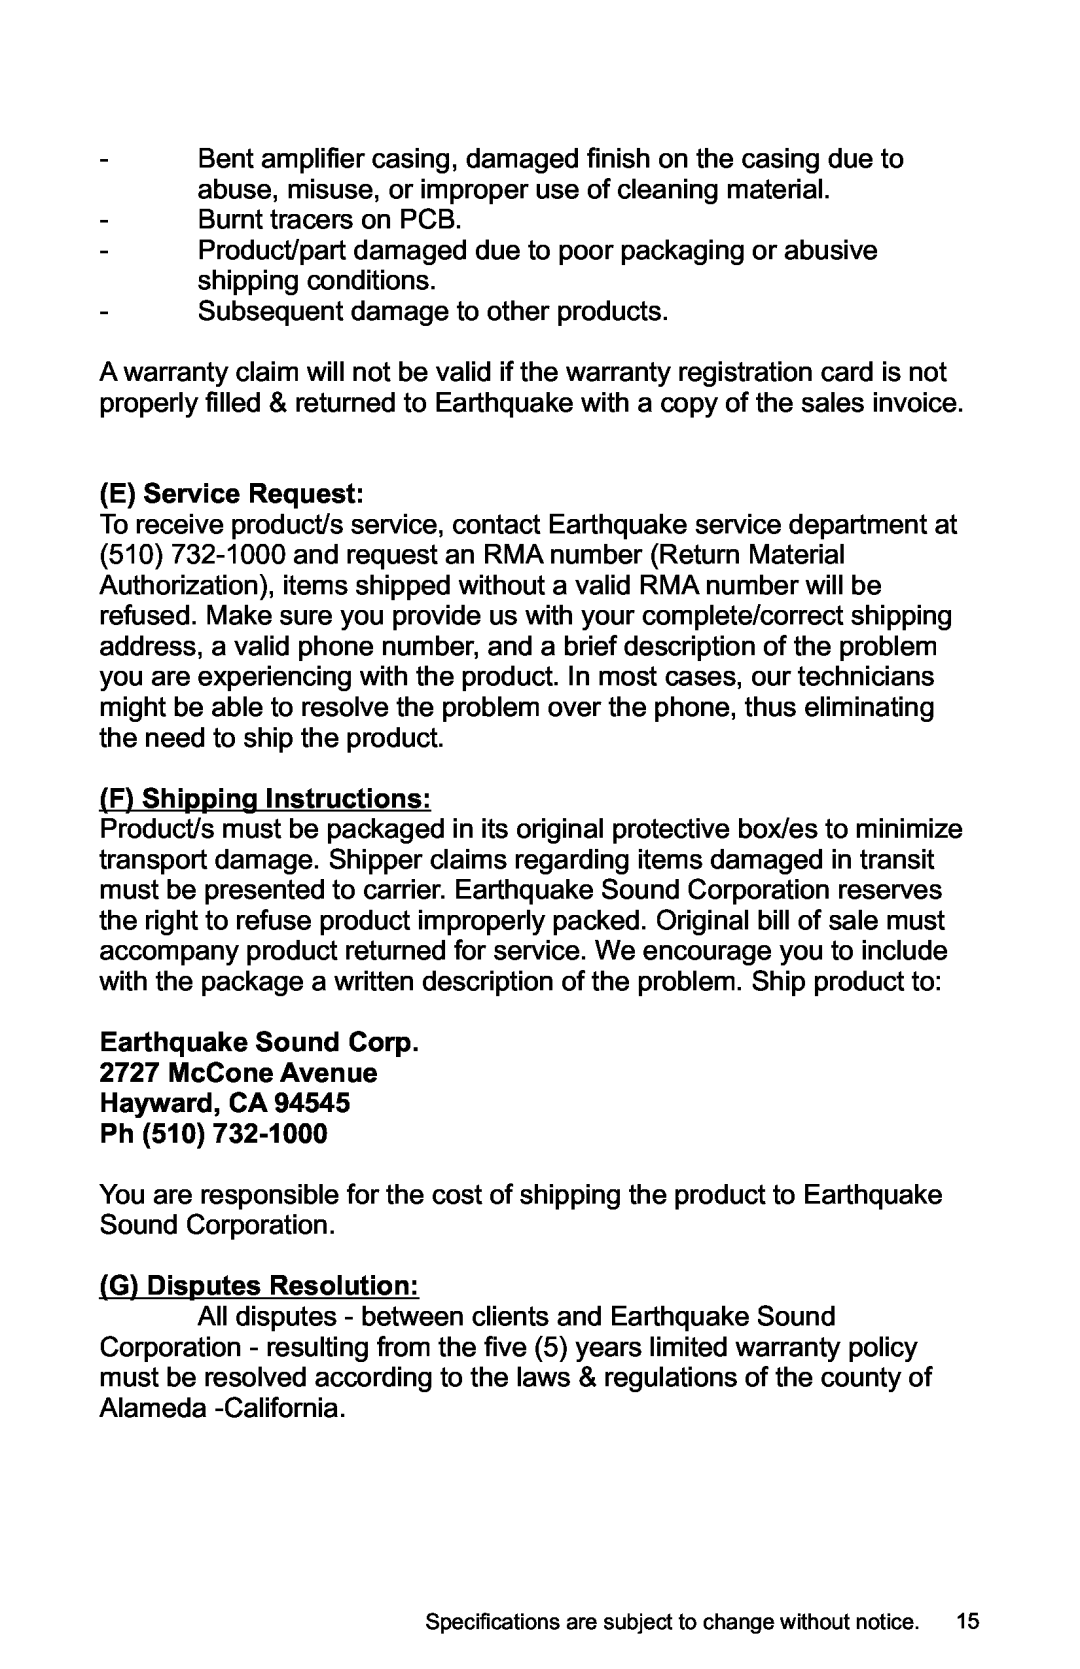 Earthquake Sound IQ-52R, IQ-52S, IQ-52P user manual E Service Request, F Shipping Instructions, G Disputes Resolution 